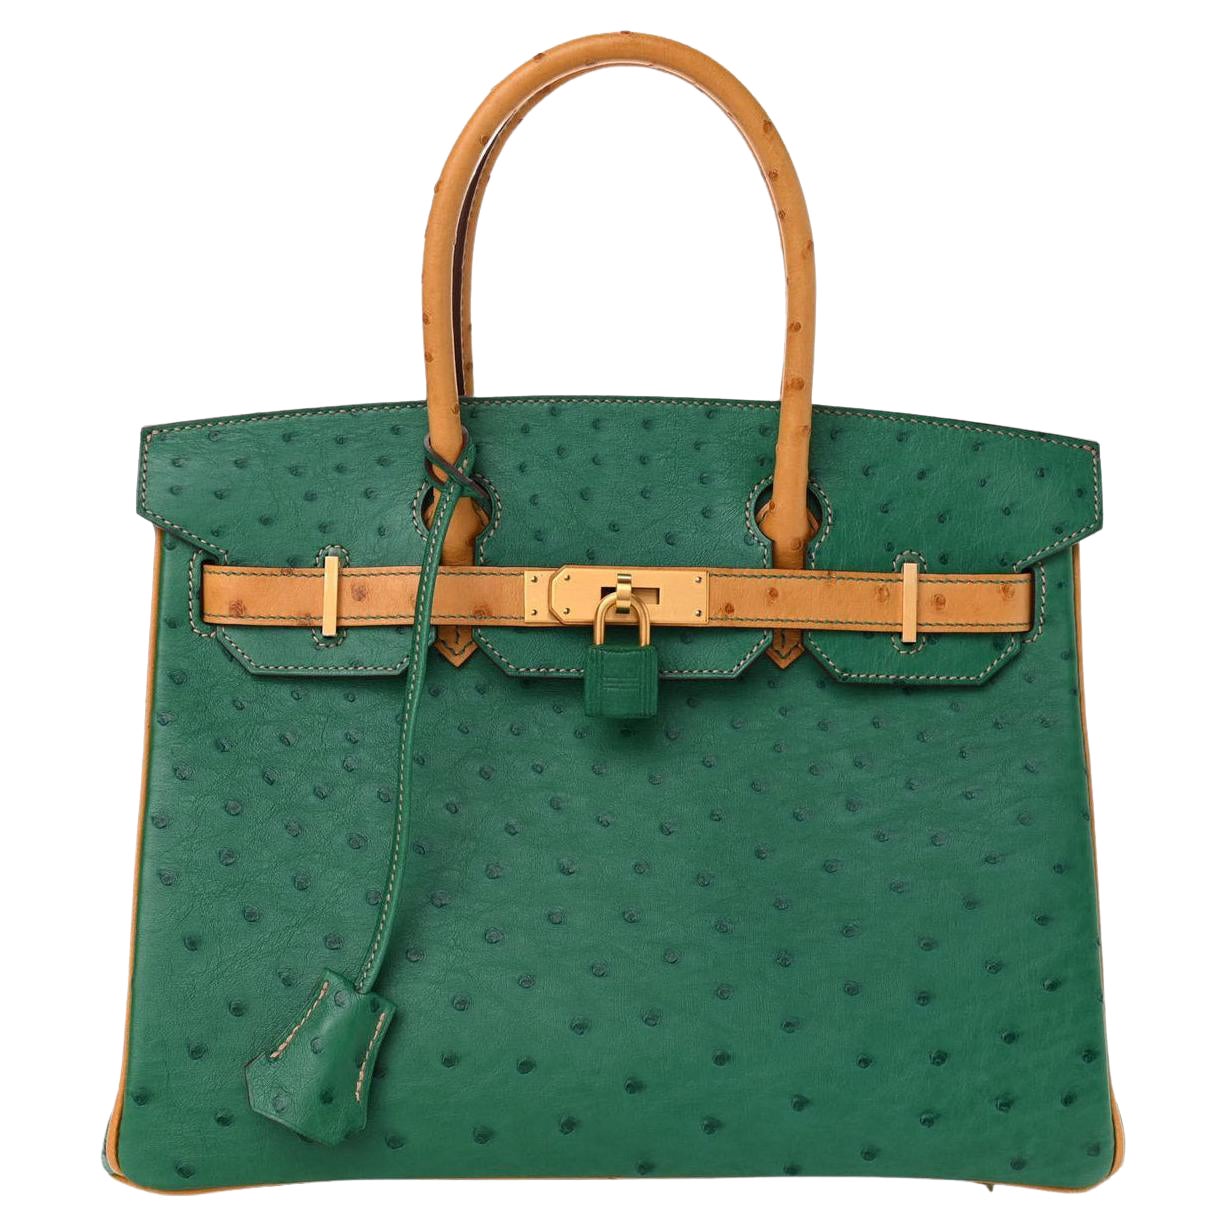 HERMÈS NEW Birkin 30 Tan Green Ostrich Exotic Gold Hardware Top Handle Tote Bag